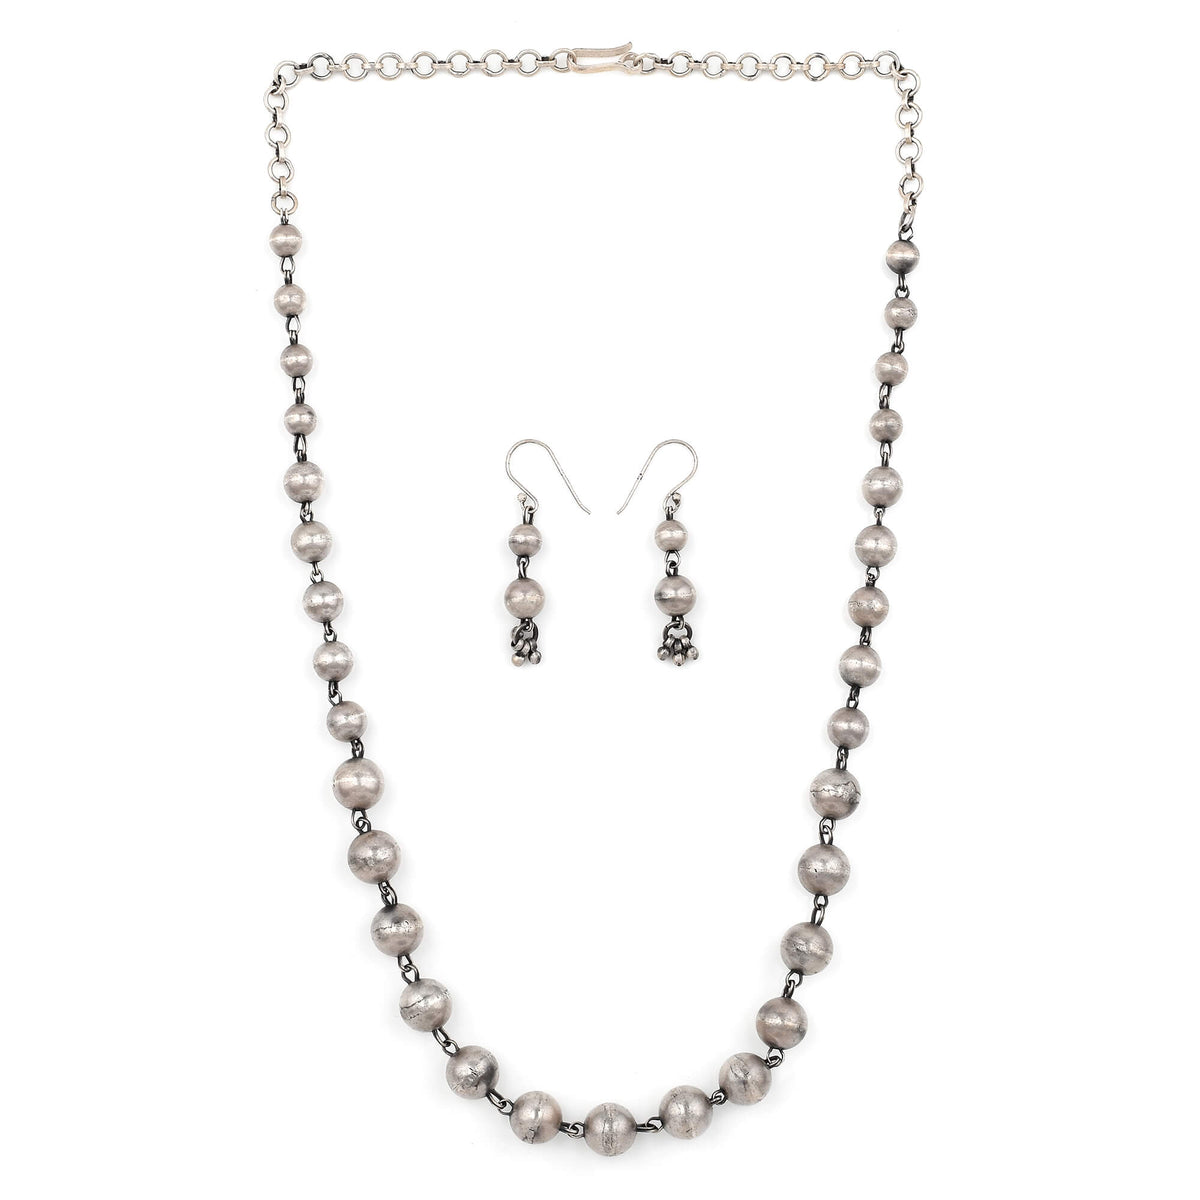 Oxidized Silver Bead Necklace Set